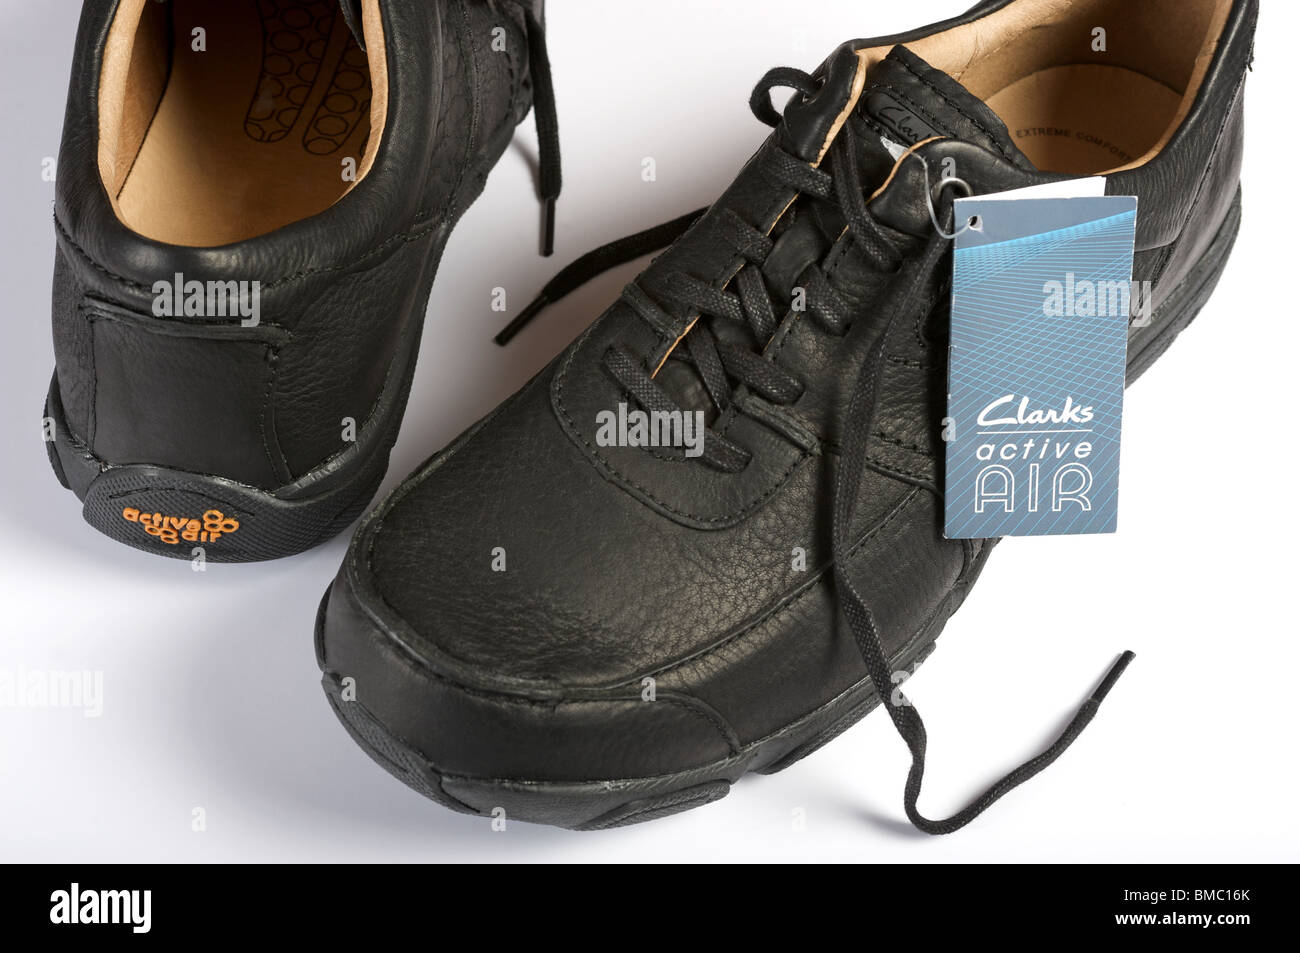 clarks active air mens shoes